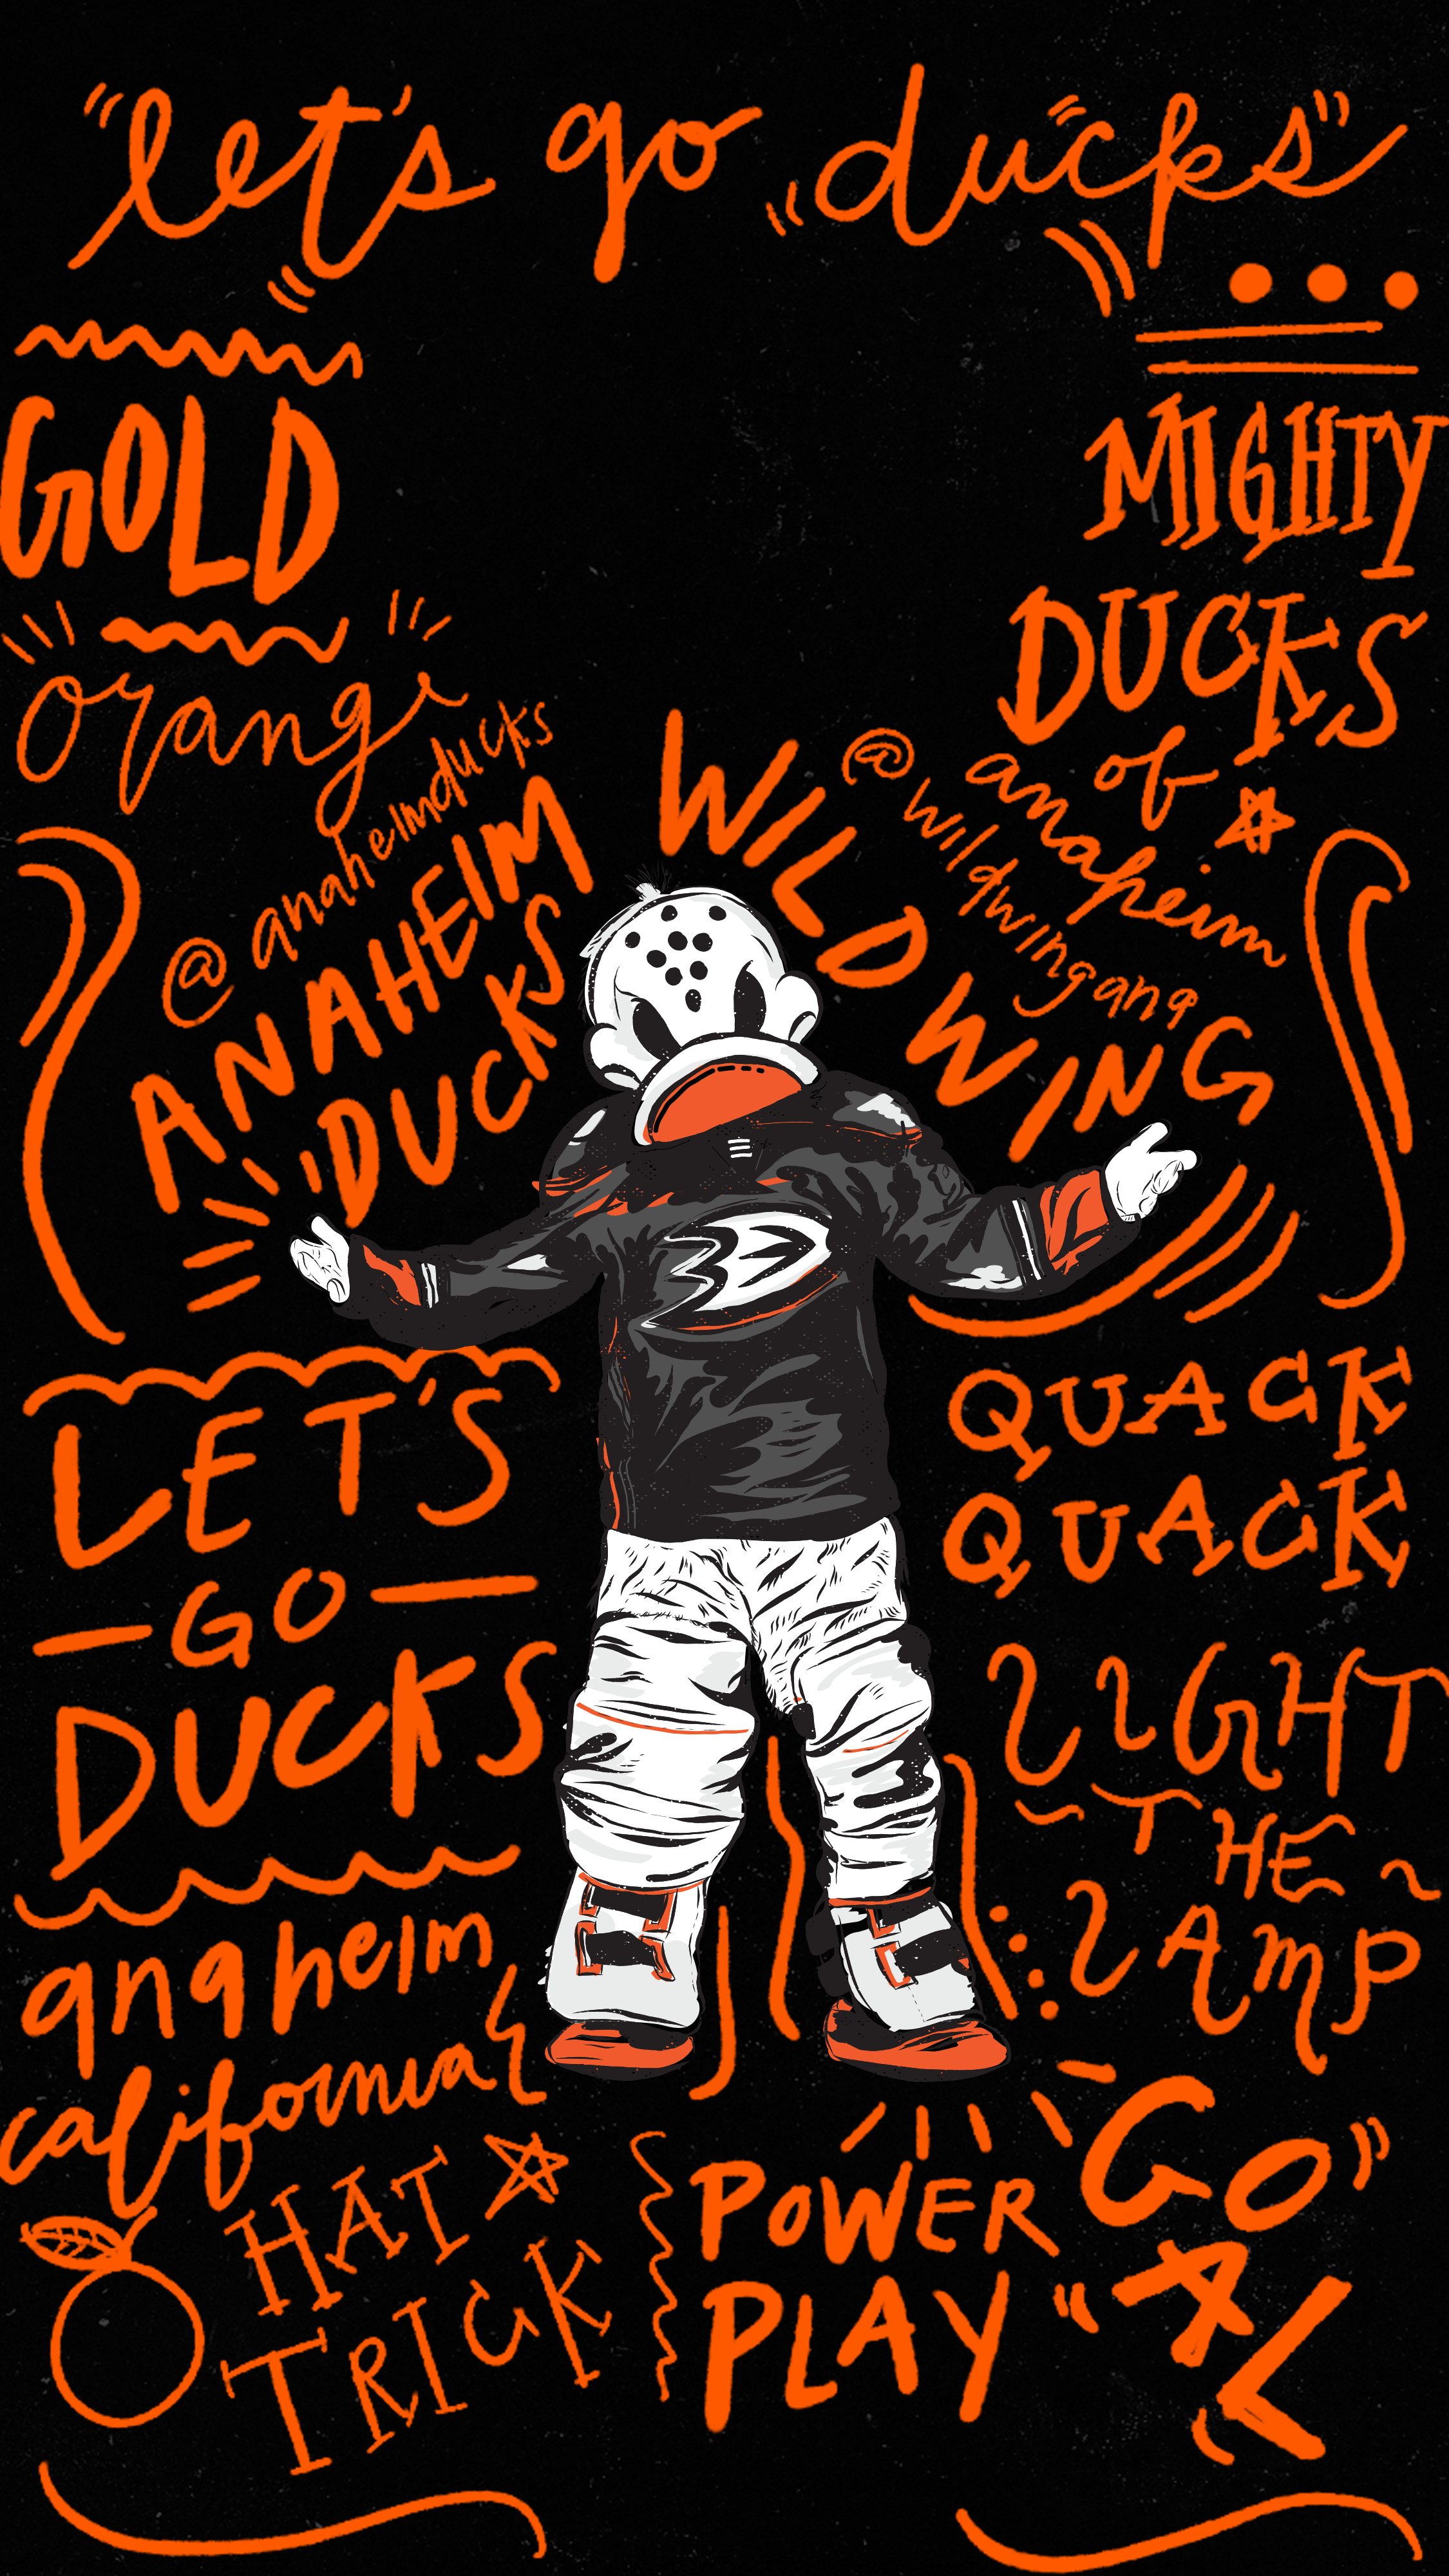 Sports Anaheim Ducks HD Wallpaper